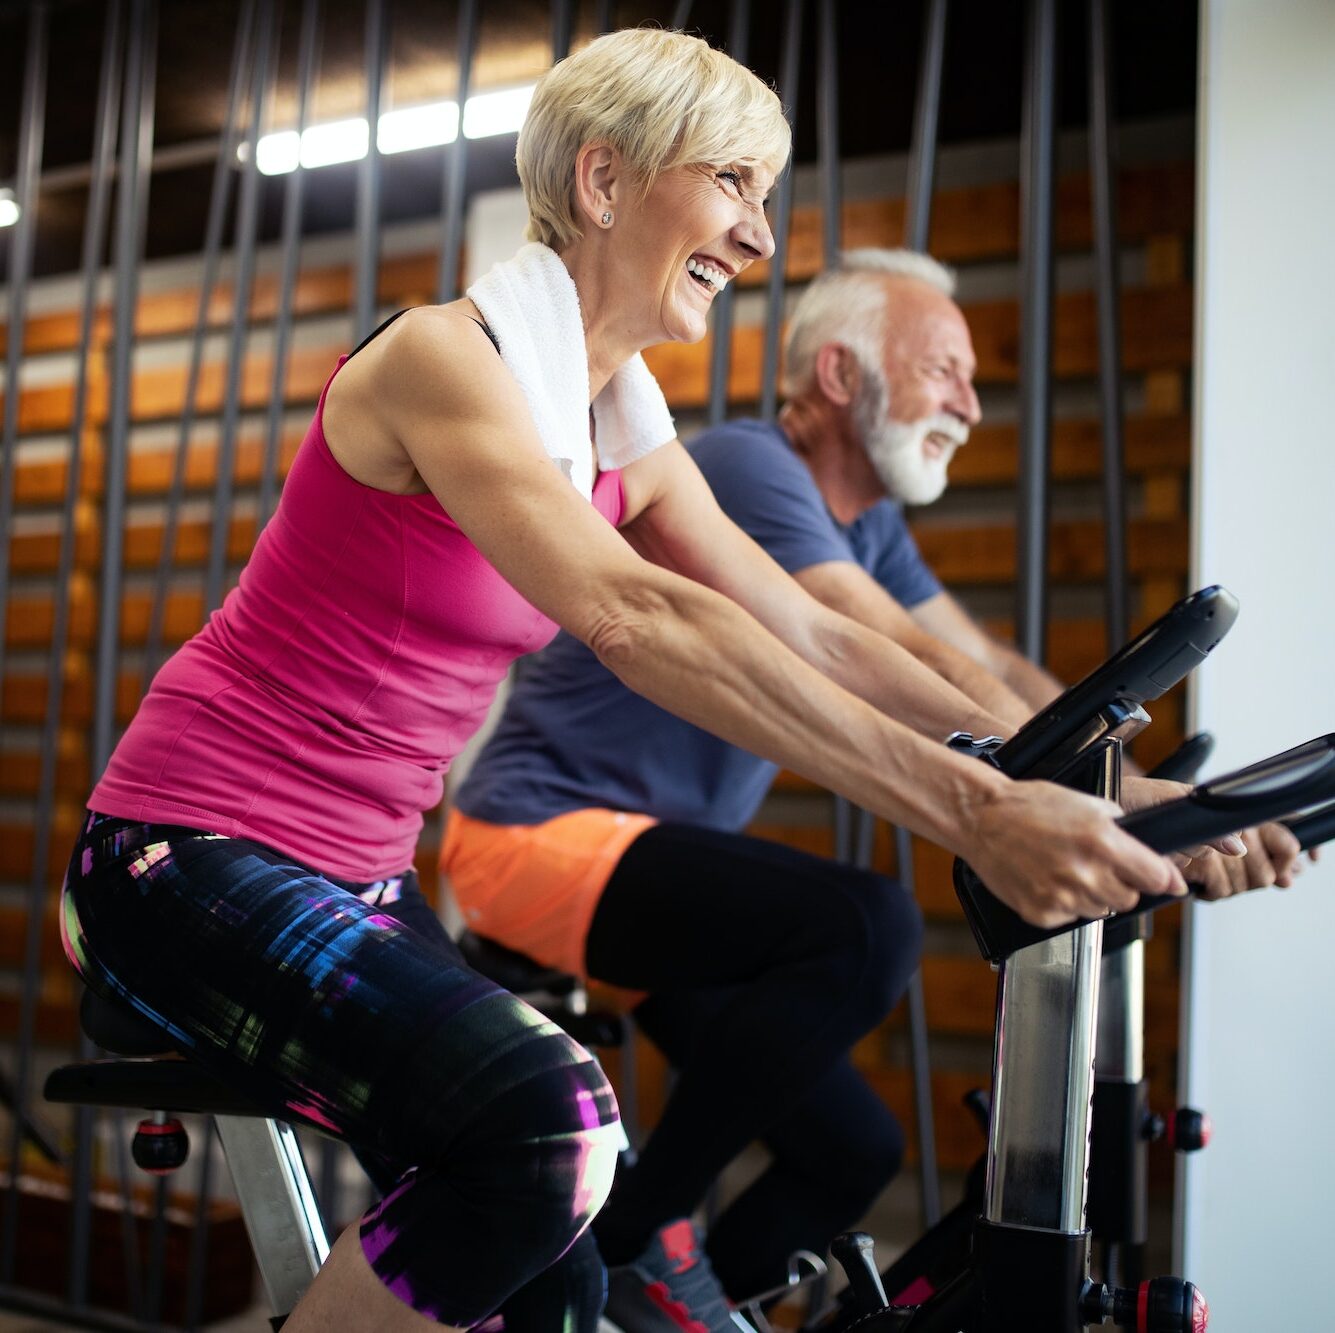 Happy senior people doing indoor biking in a fitness club